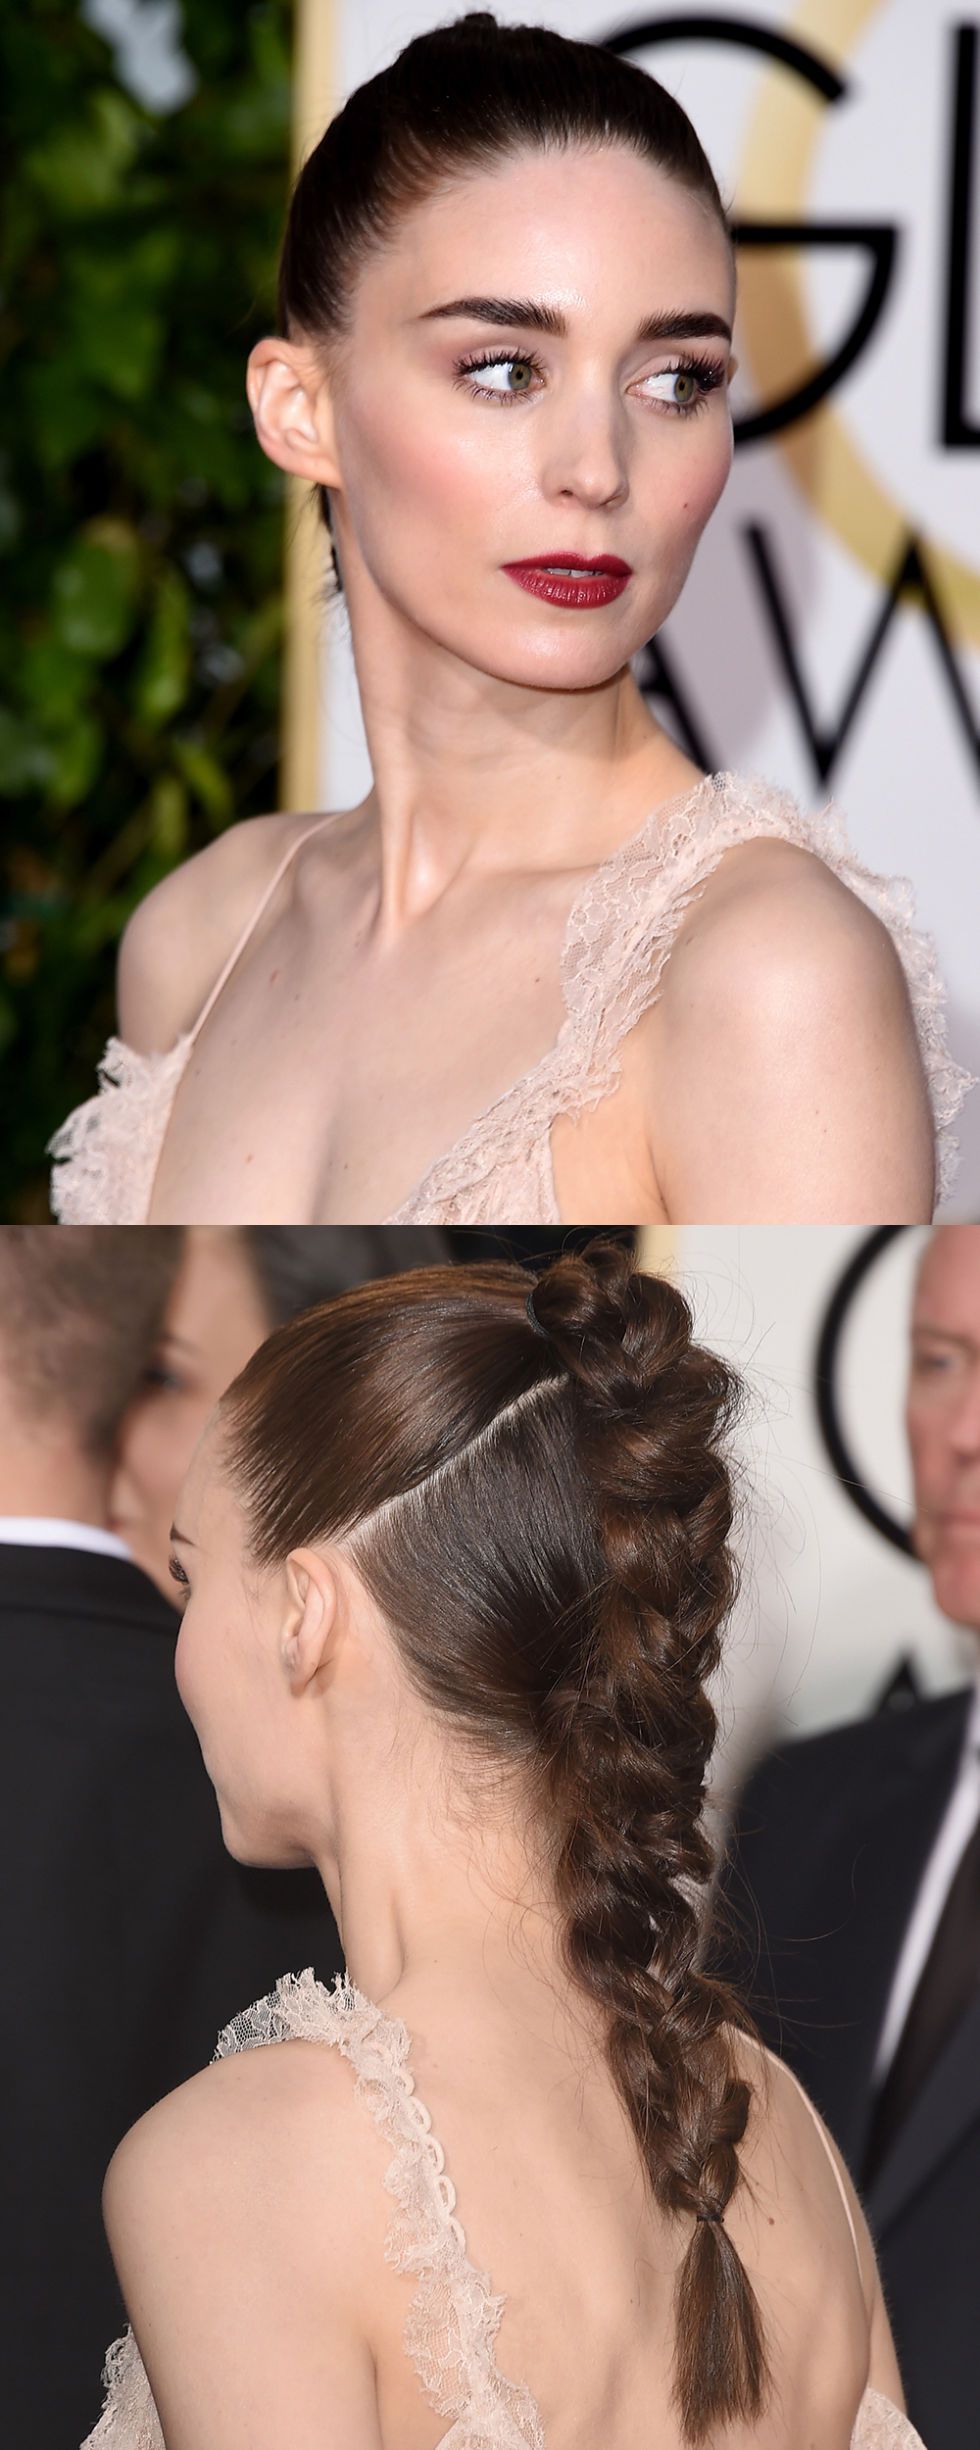 Rooney Mara - Golden Globes 2016 hair and makeup trends